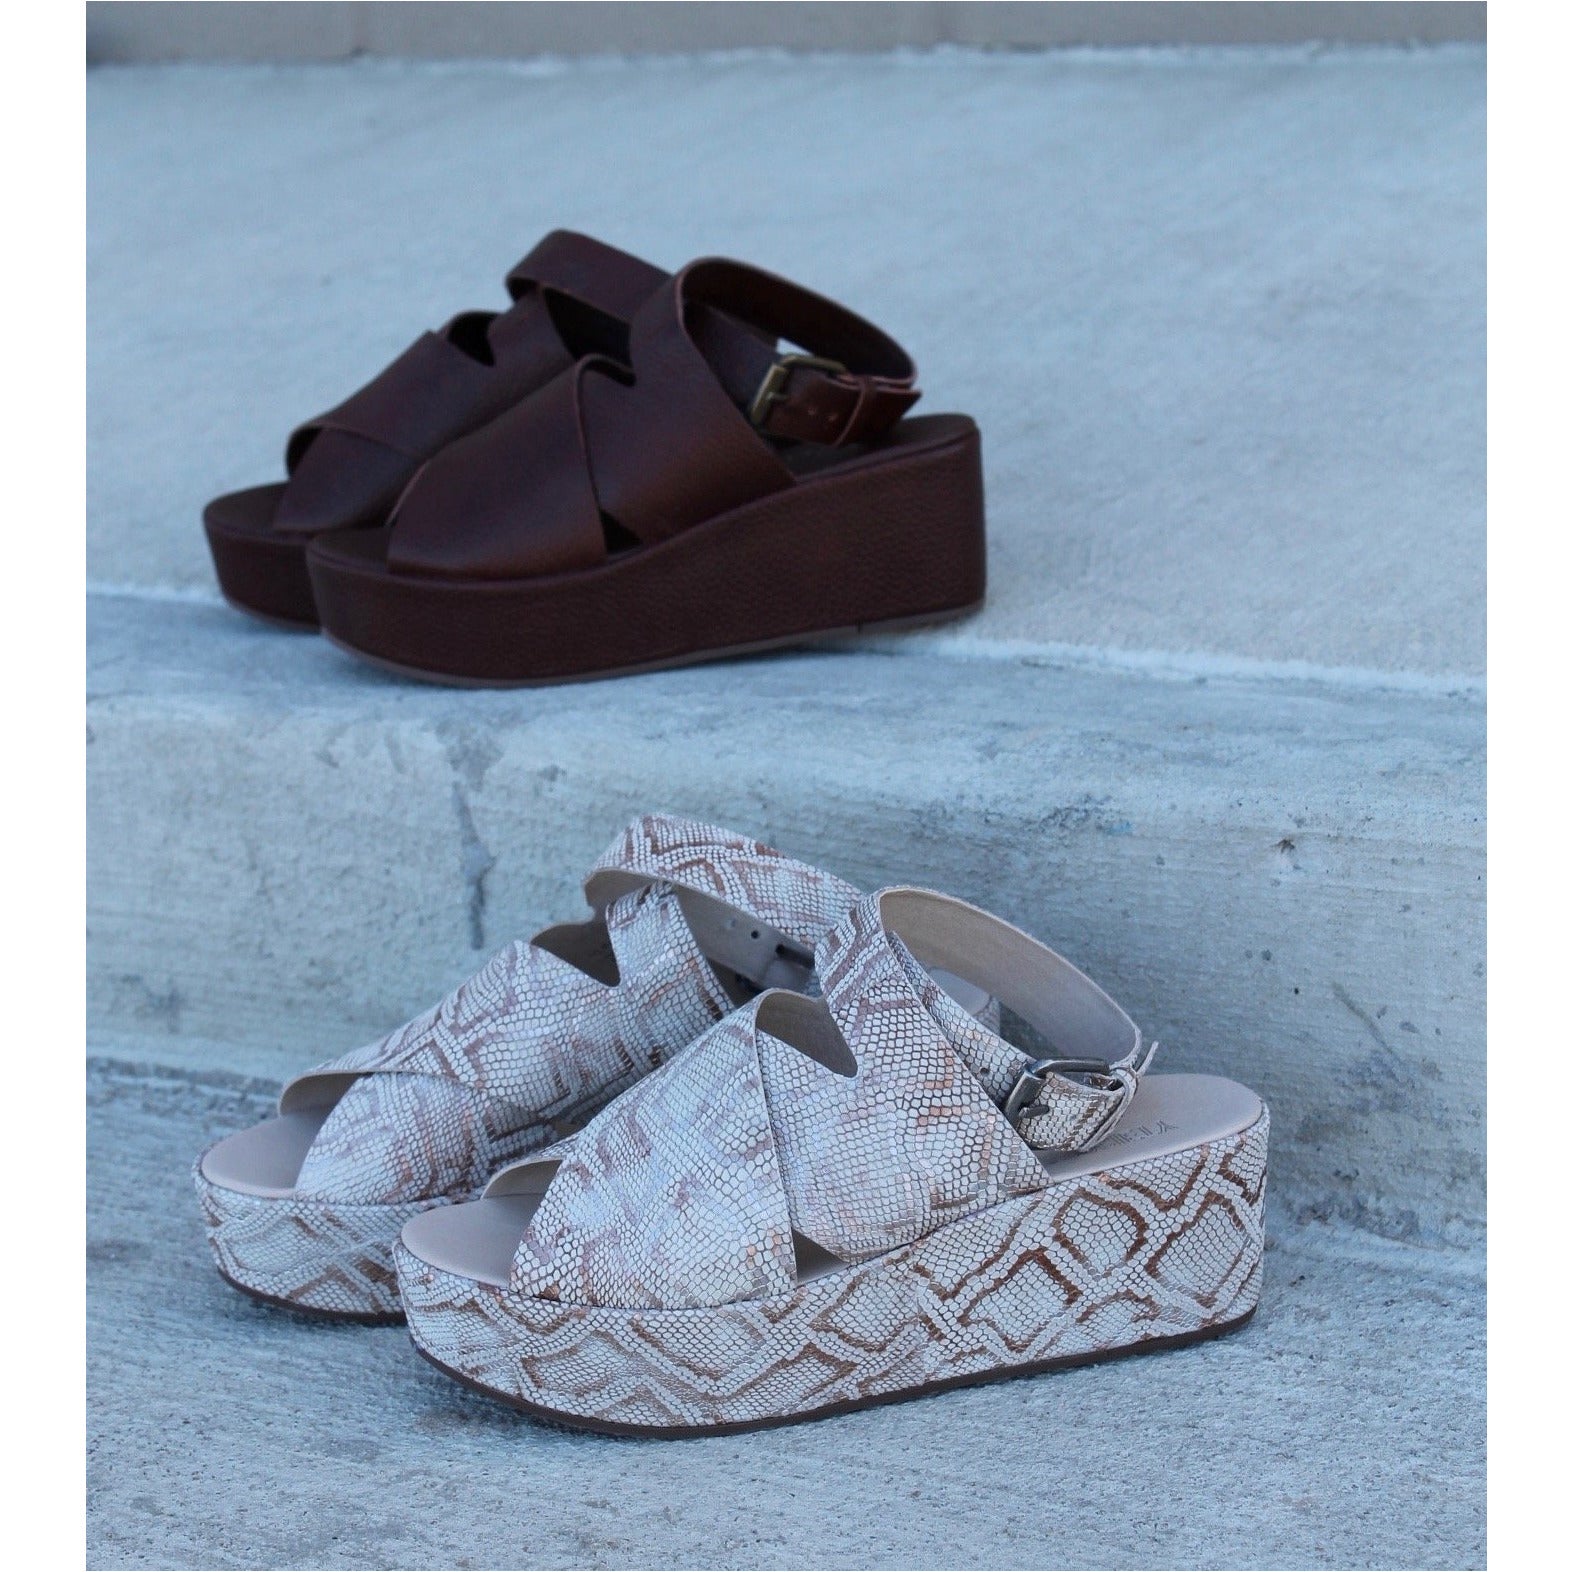 Matisse Runaway Platform Sandal